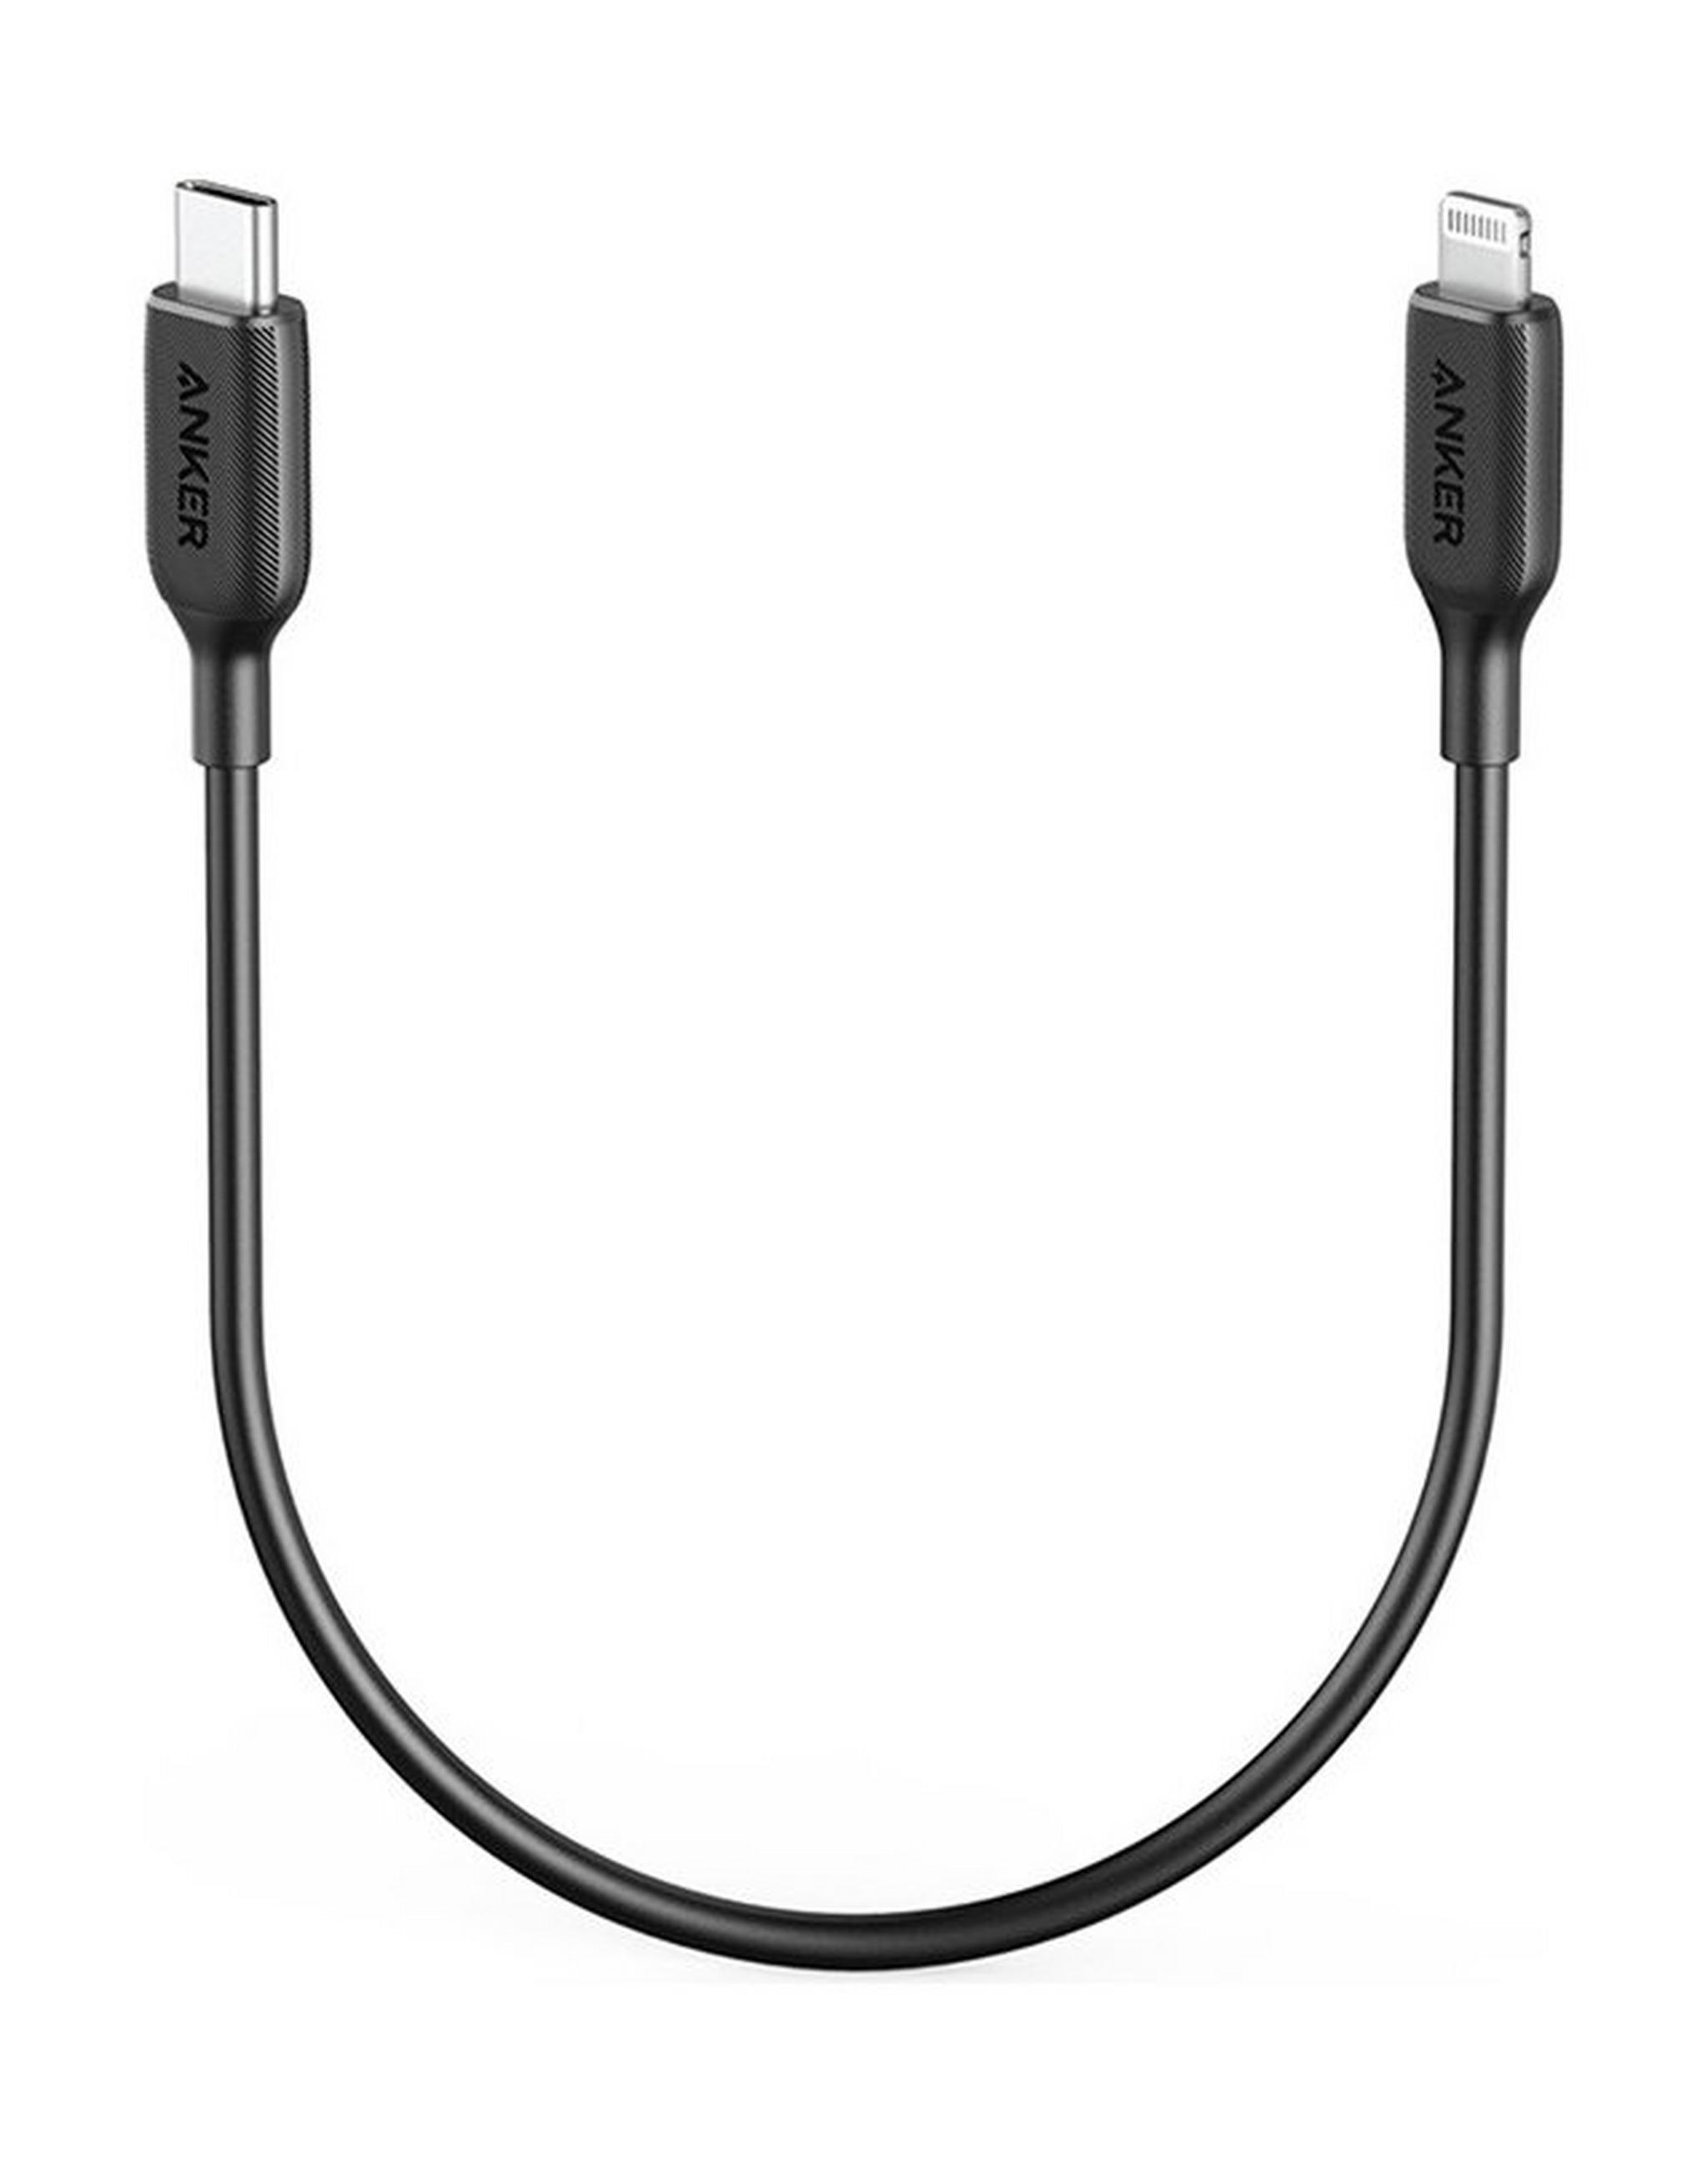 Anker PowerLine III USB-C to Lightning Cable (1 Feet) - Black